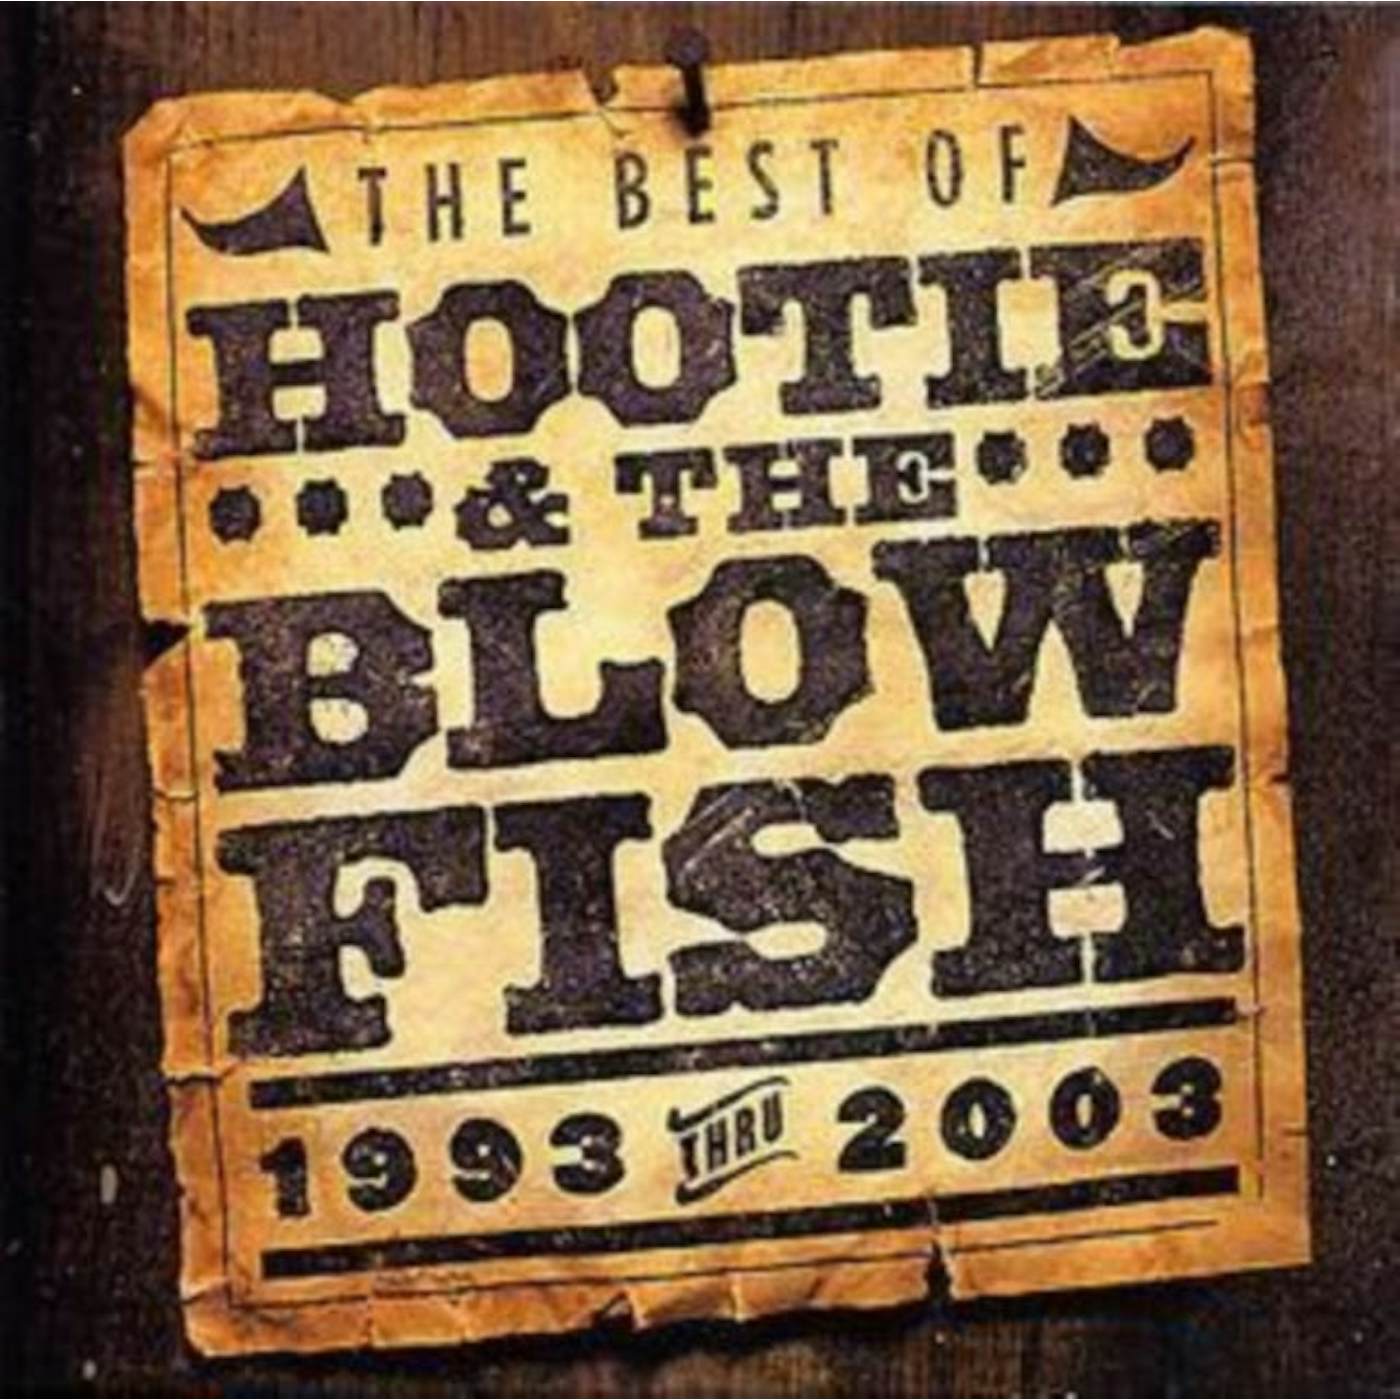 Hootie & The Blowfish CD - The Best Of (19 93 Thru 20. 03)